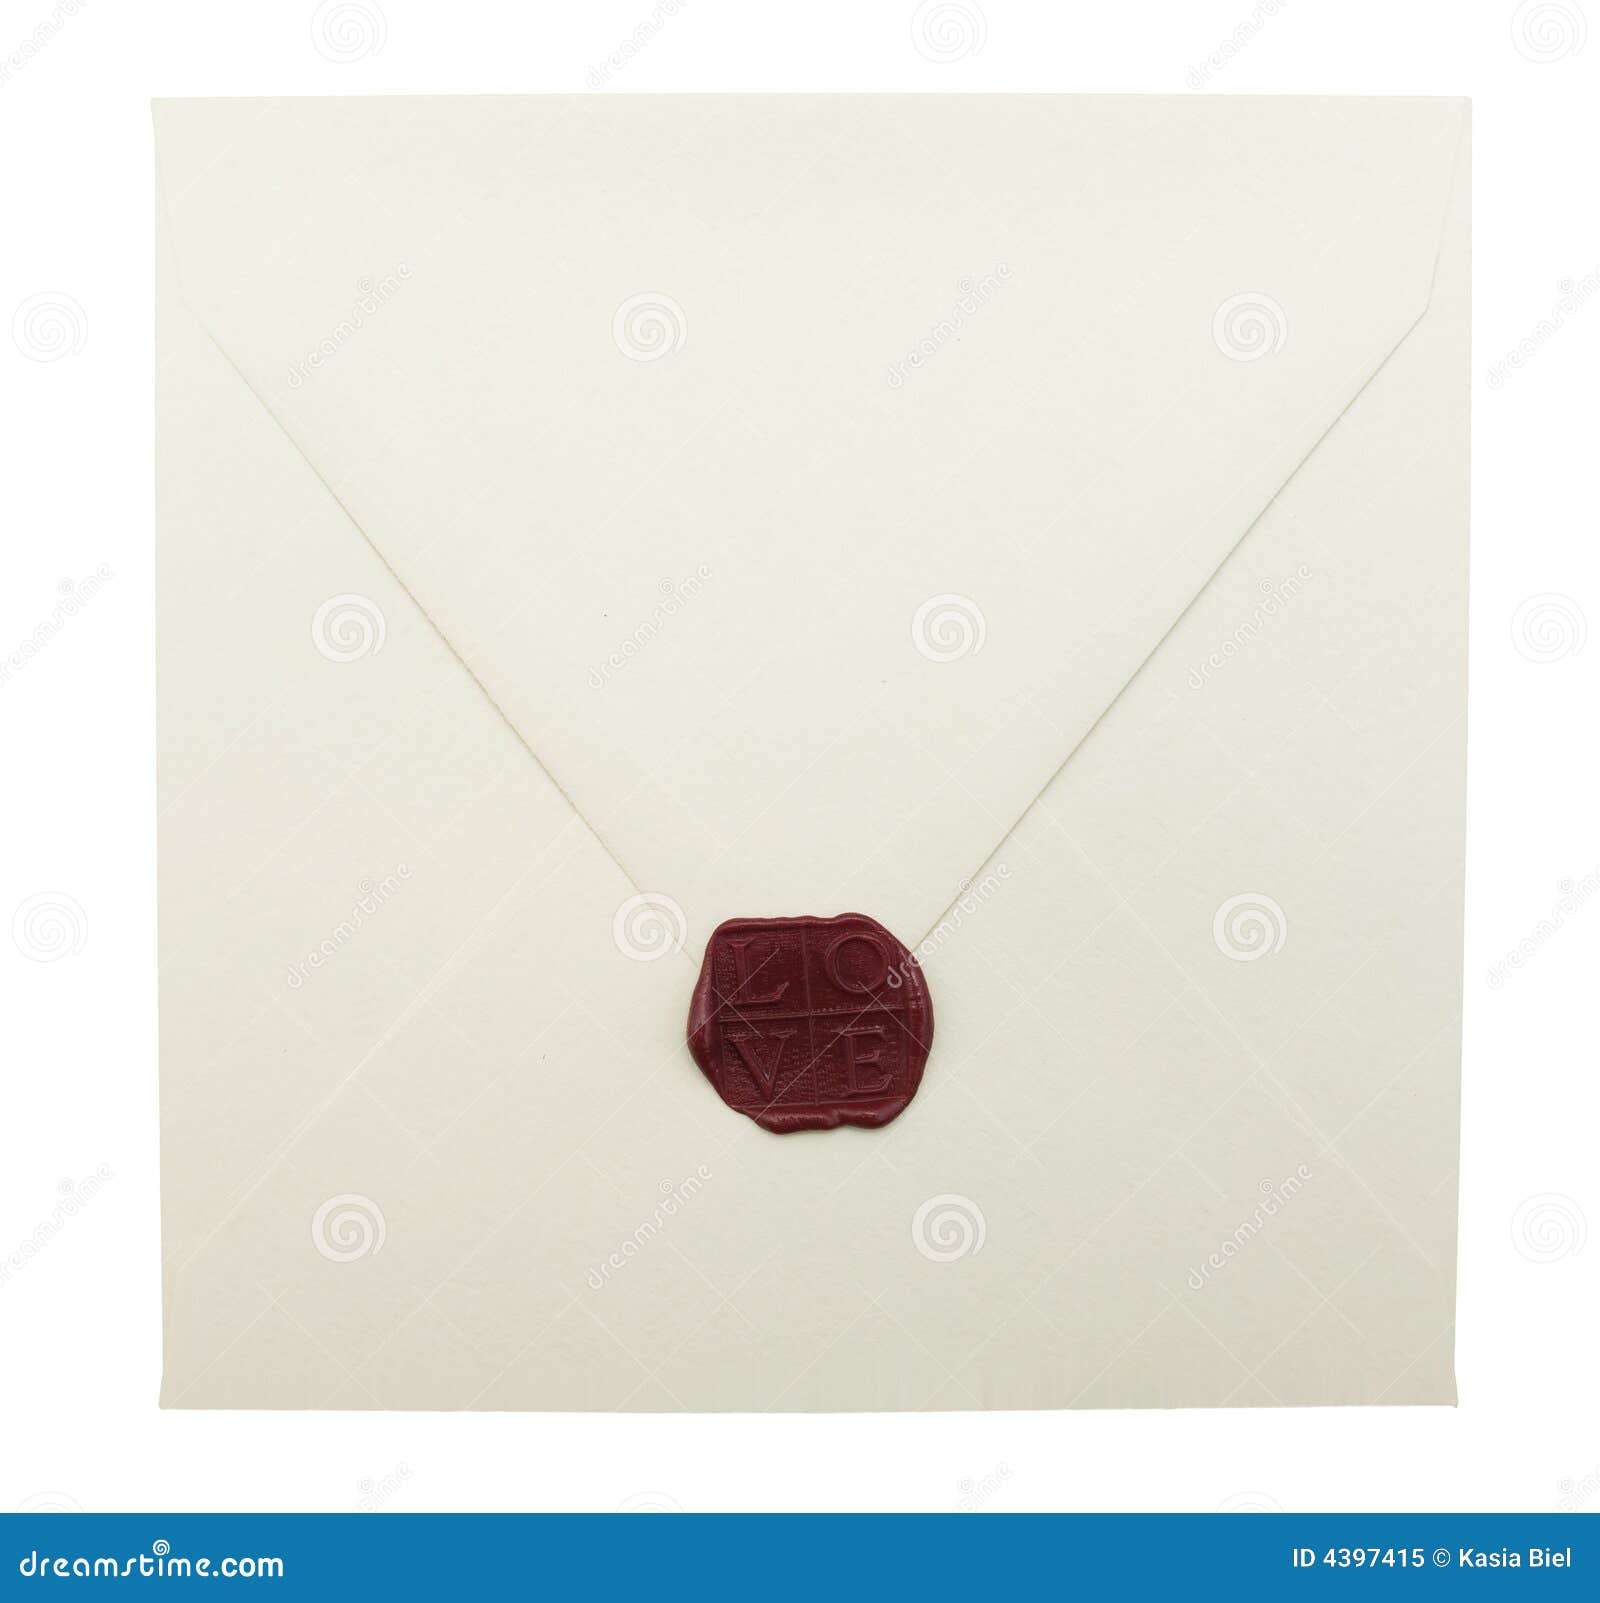 sealed envelope